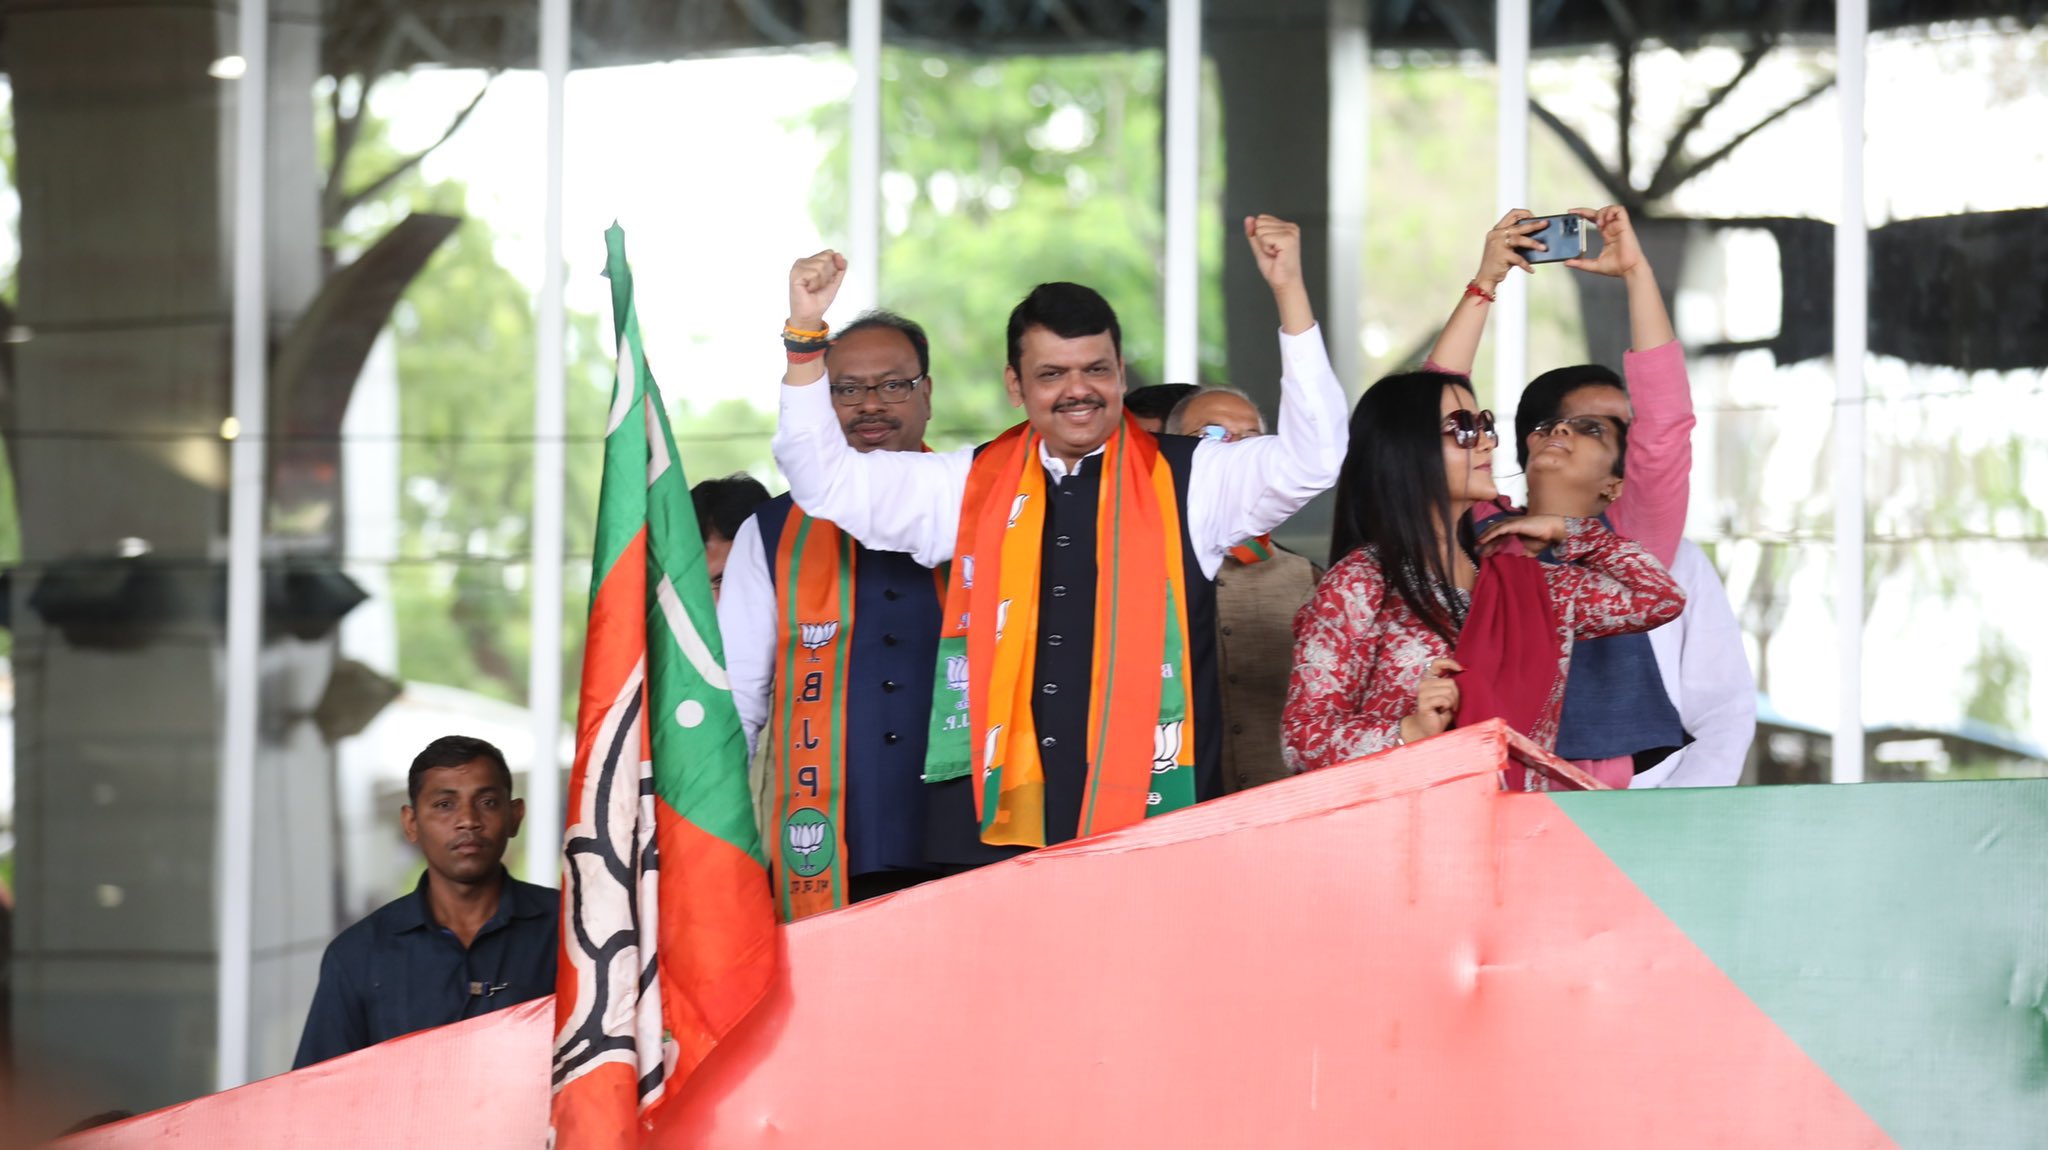 Deputy CM Devendra Fadnavis Wife Amruta Shares Photo from Nagpur Rally says his comeback is phenomenal